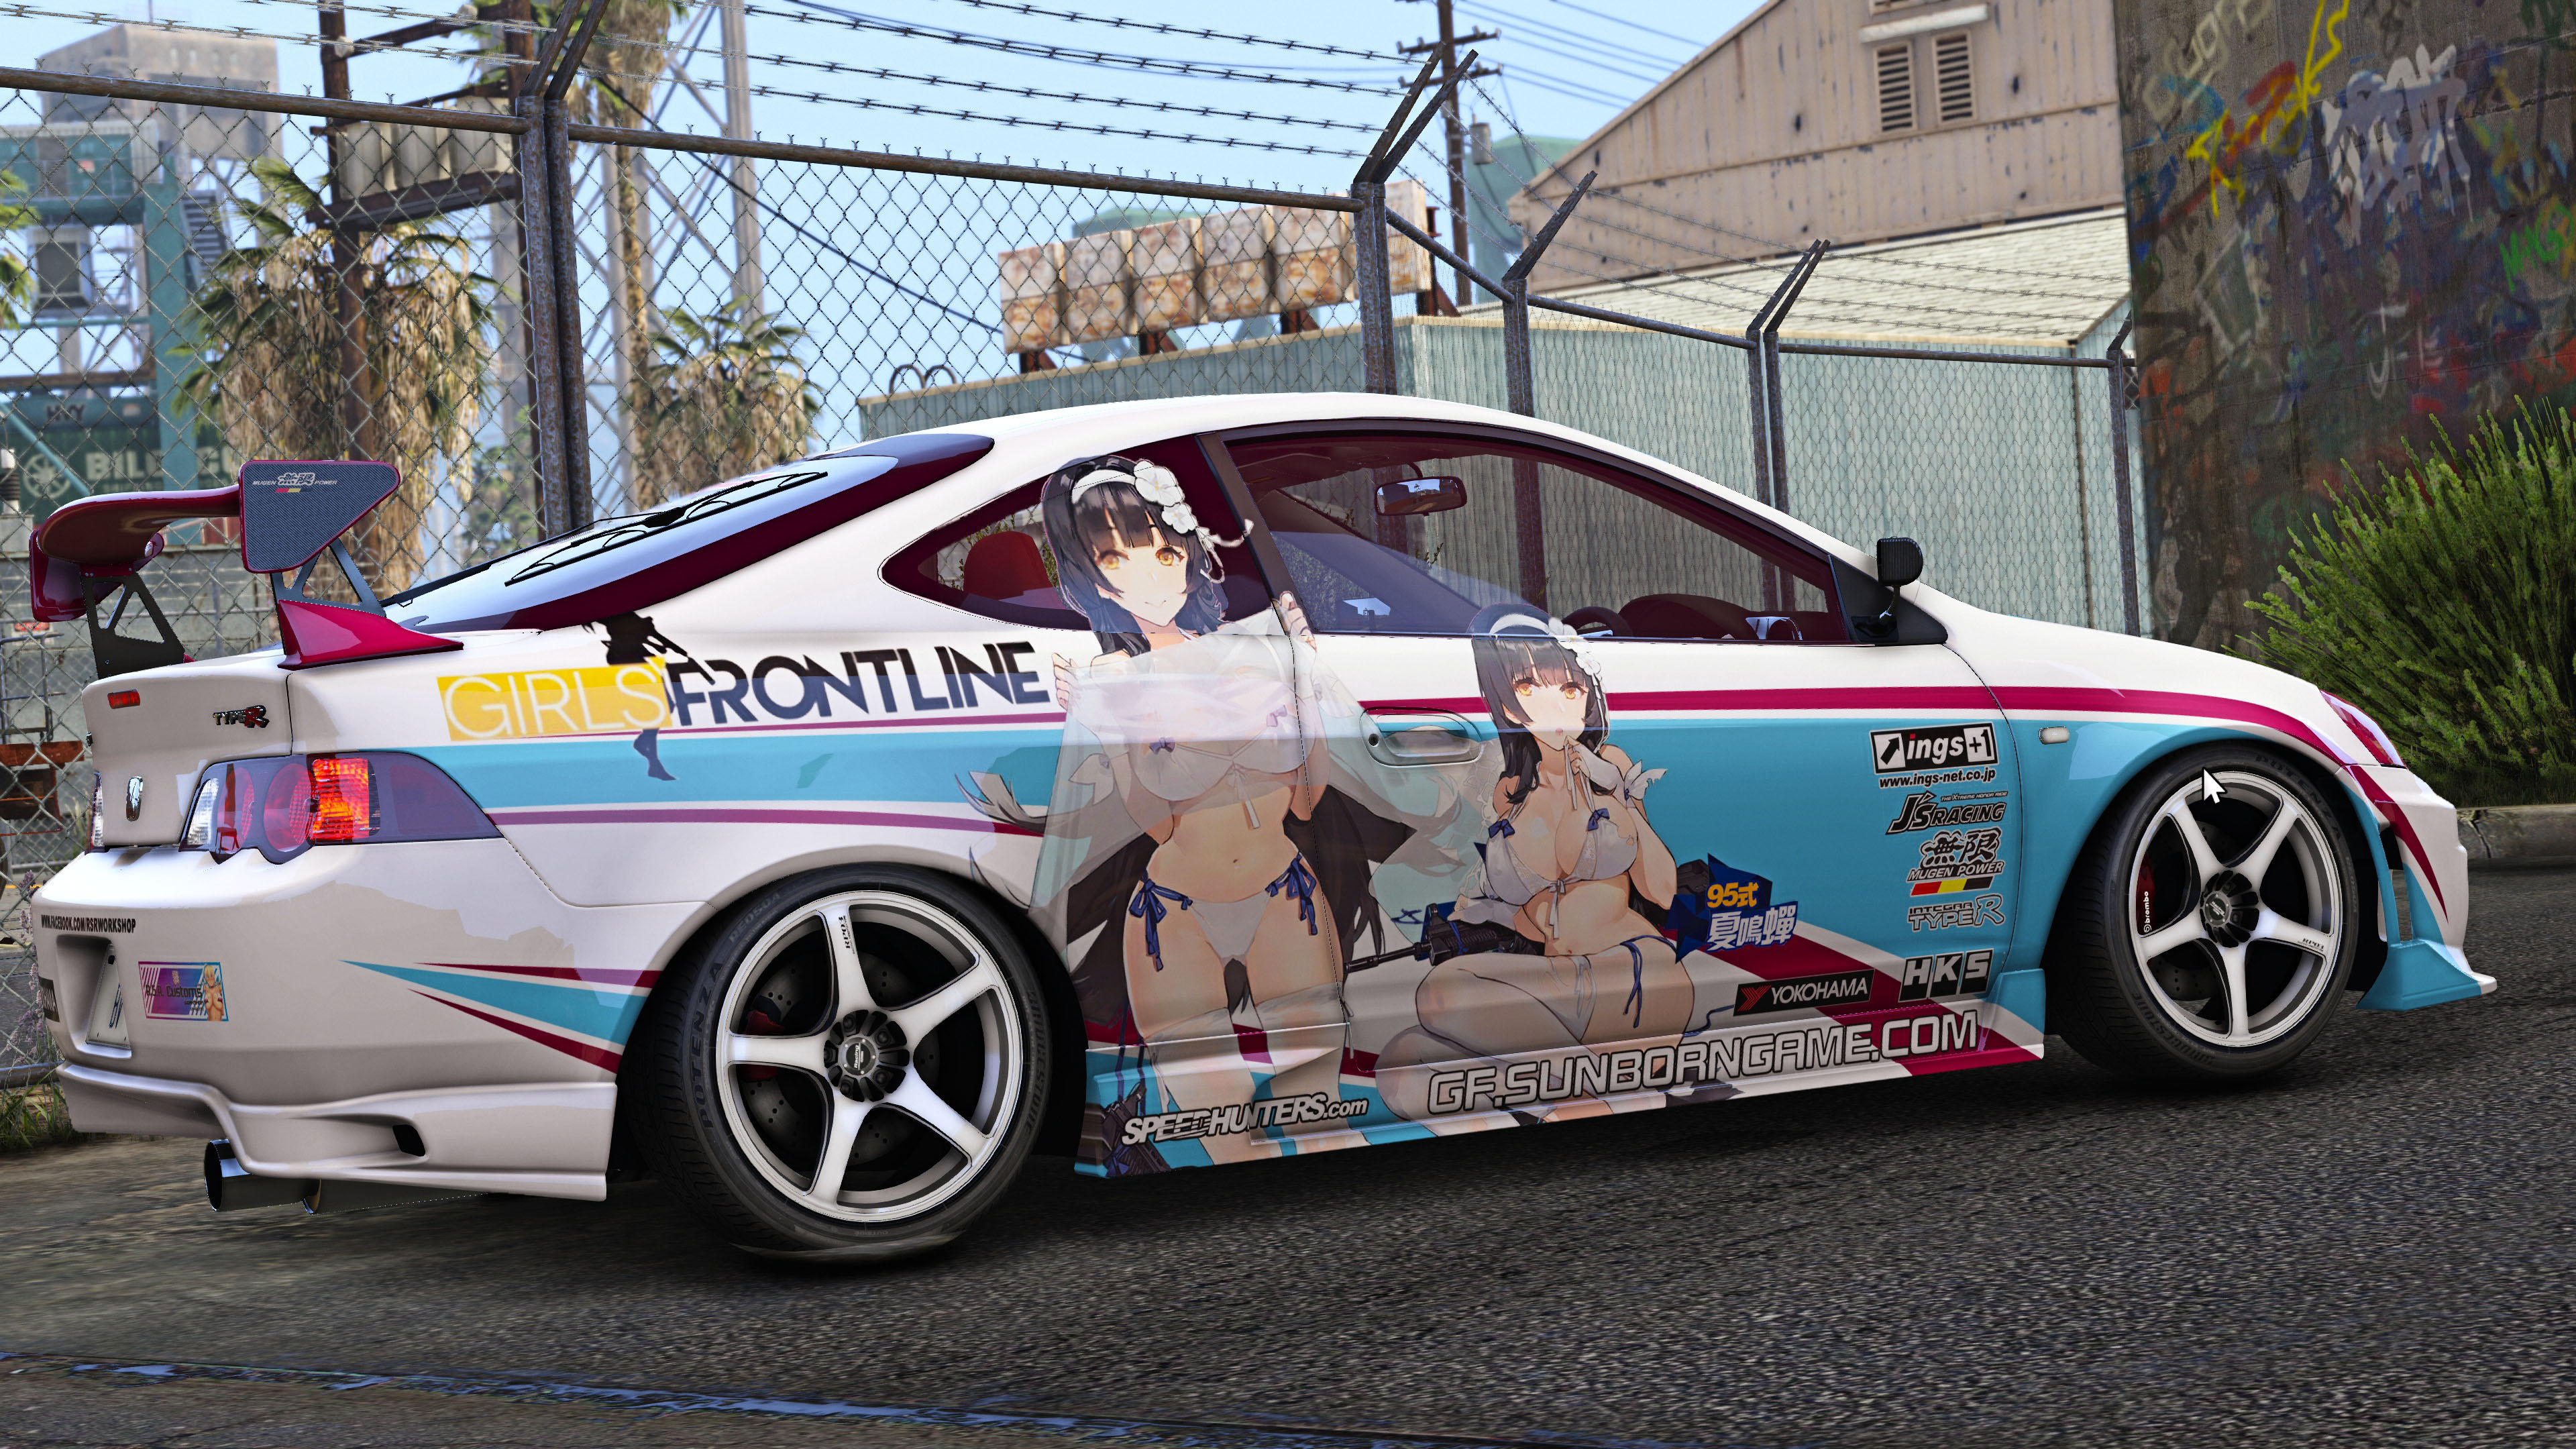 Share more than 146 anime themed cars - dedaotaonec